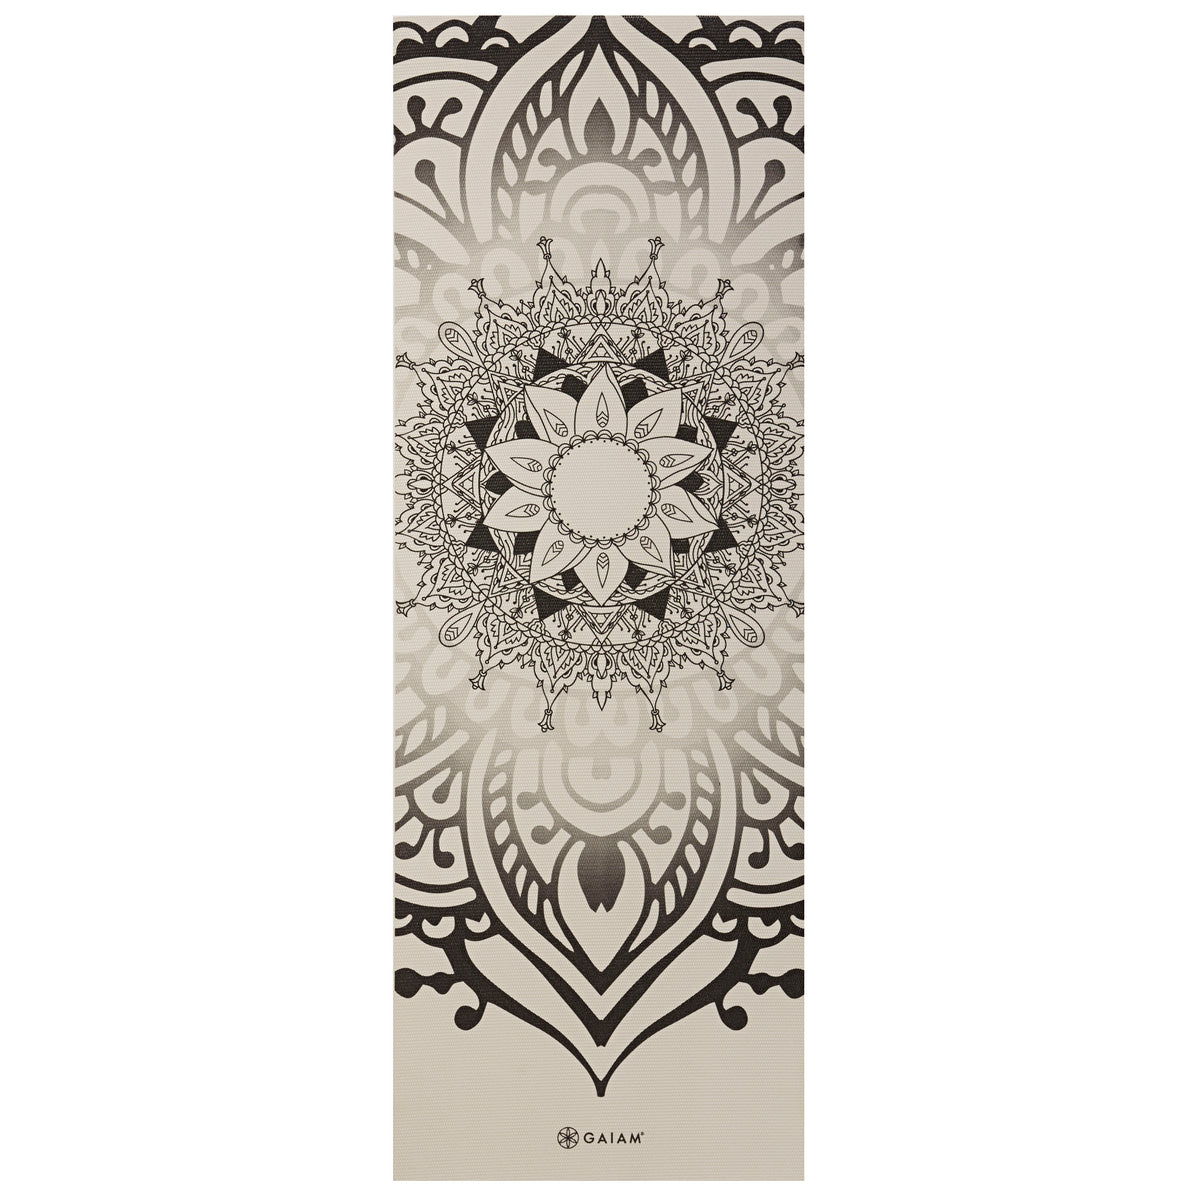 Gaiam Sundial Yoga Mat (5mm) Dovetail flat